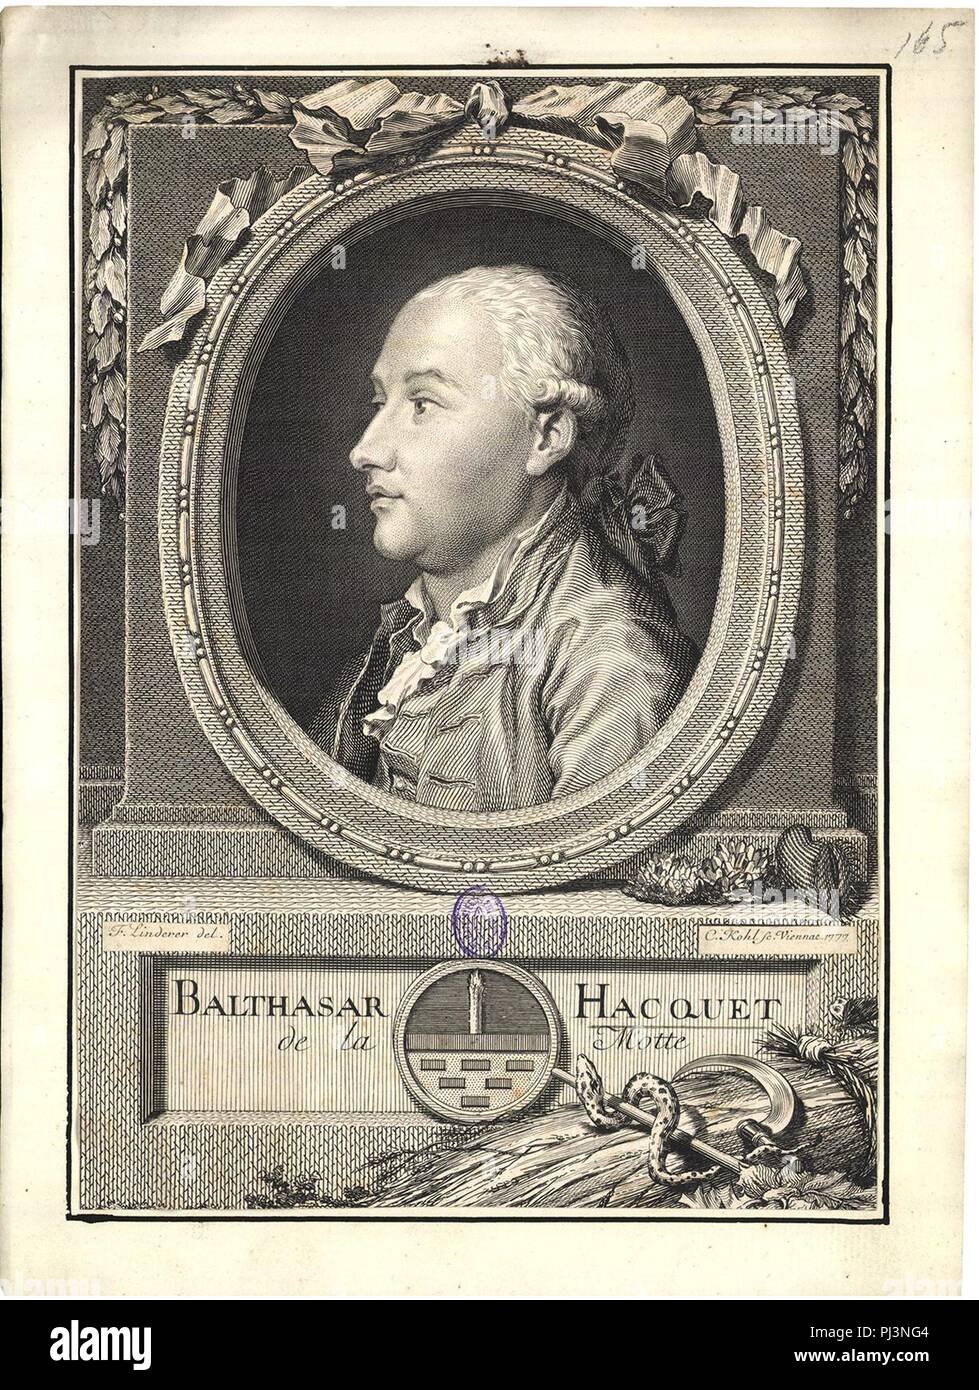 Balthasar Hacquet - Linderer, Kohl (1777) - copper engraving. Stock Photo